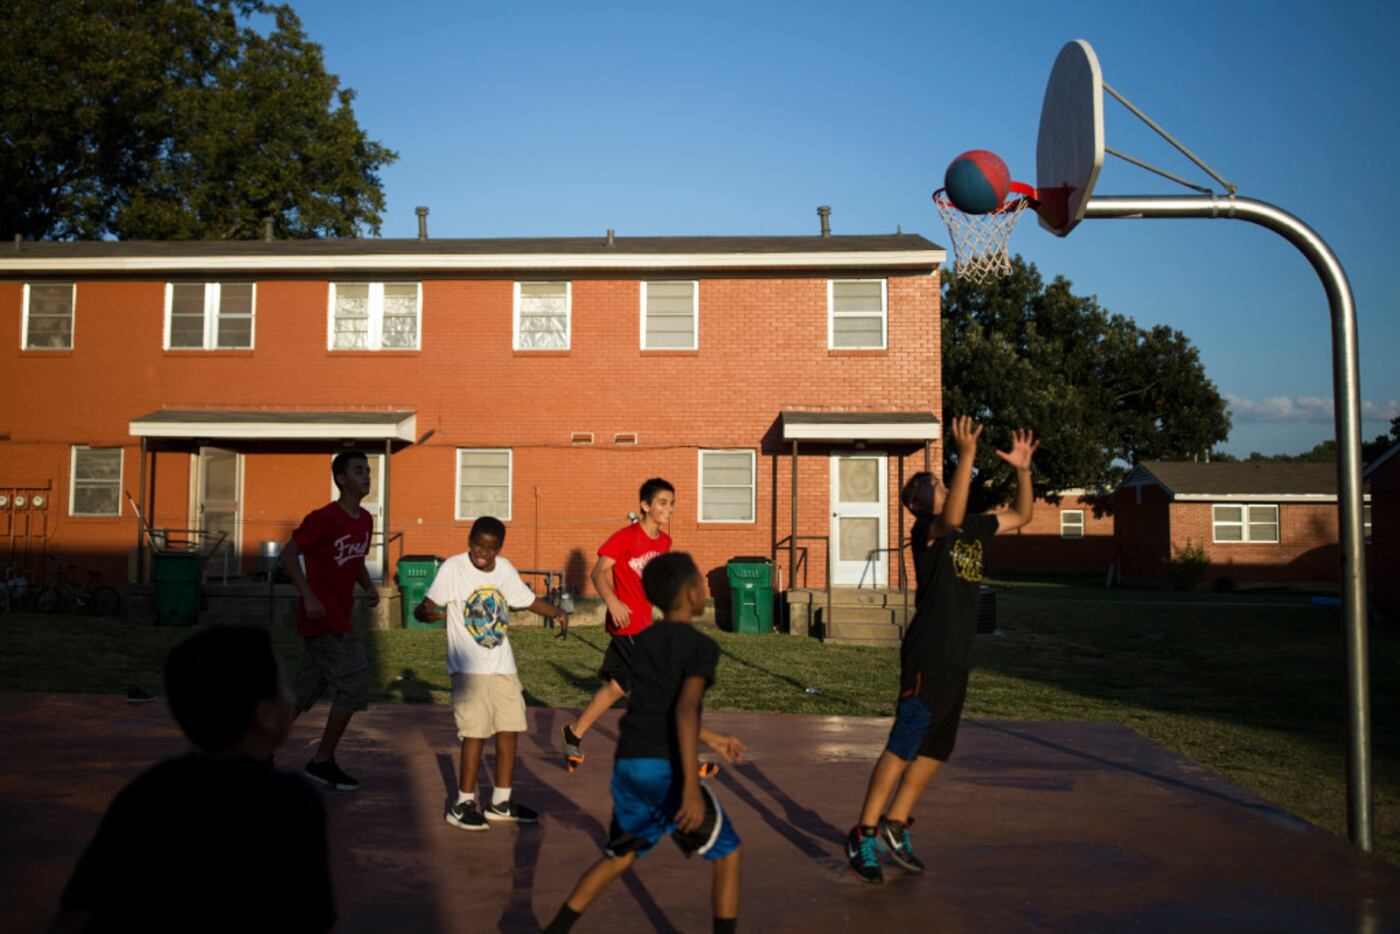 Neighborhood kids play baseball on the basketball court at Merritt Homes. (Ting Shen/The...